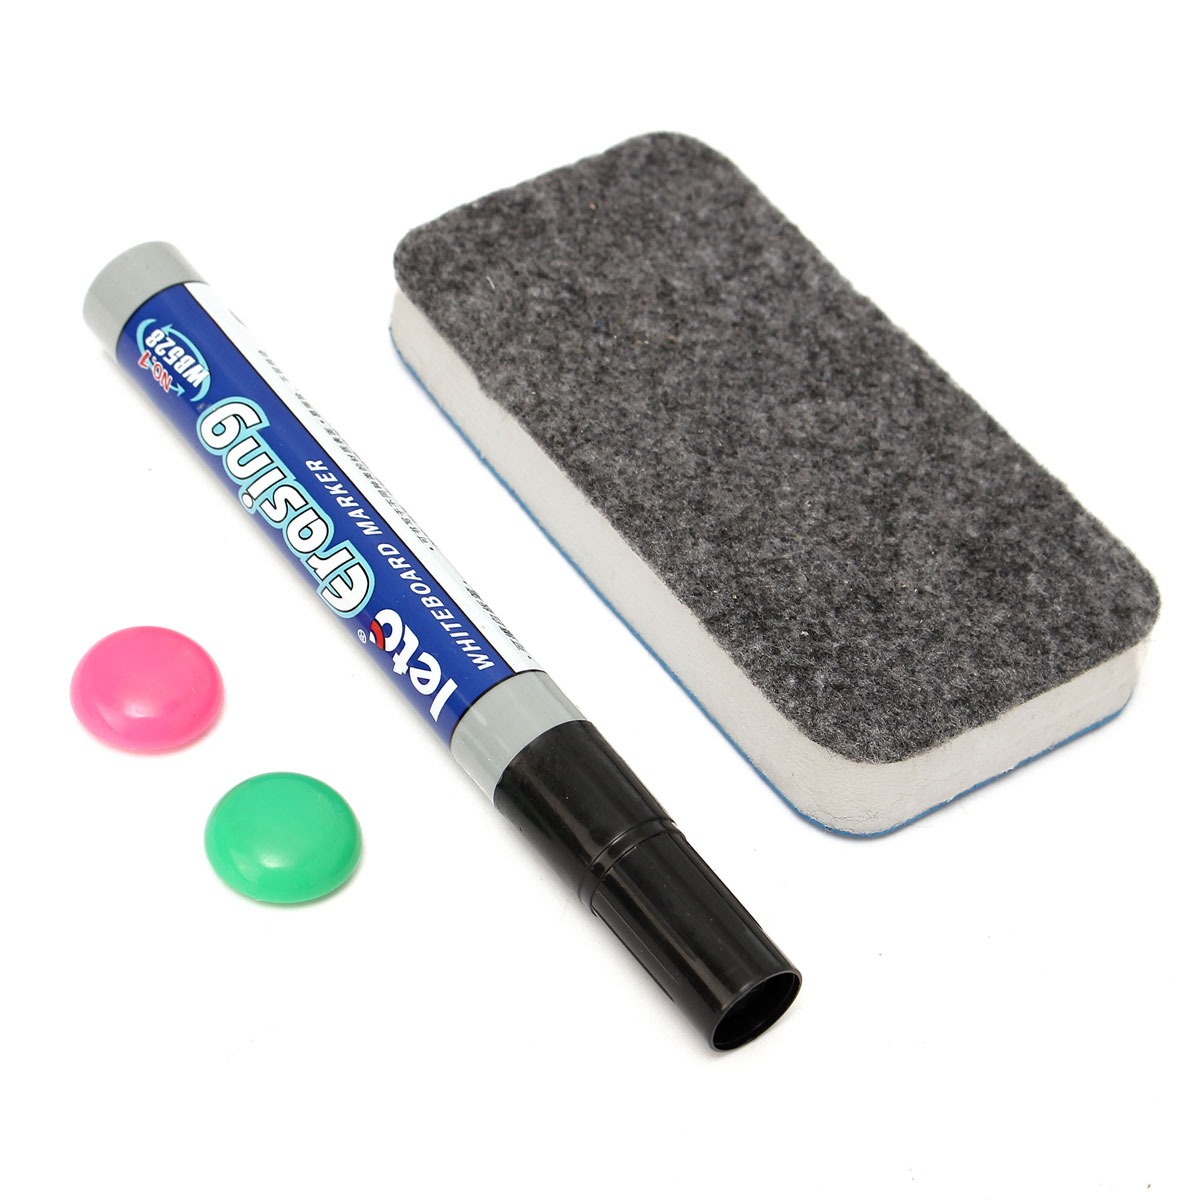 Magnetic-Dry-Wipe-Whiteboard-Portable-Office-School-Notice-Drawing-Board-1457993-6